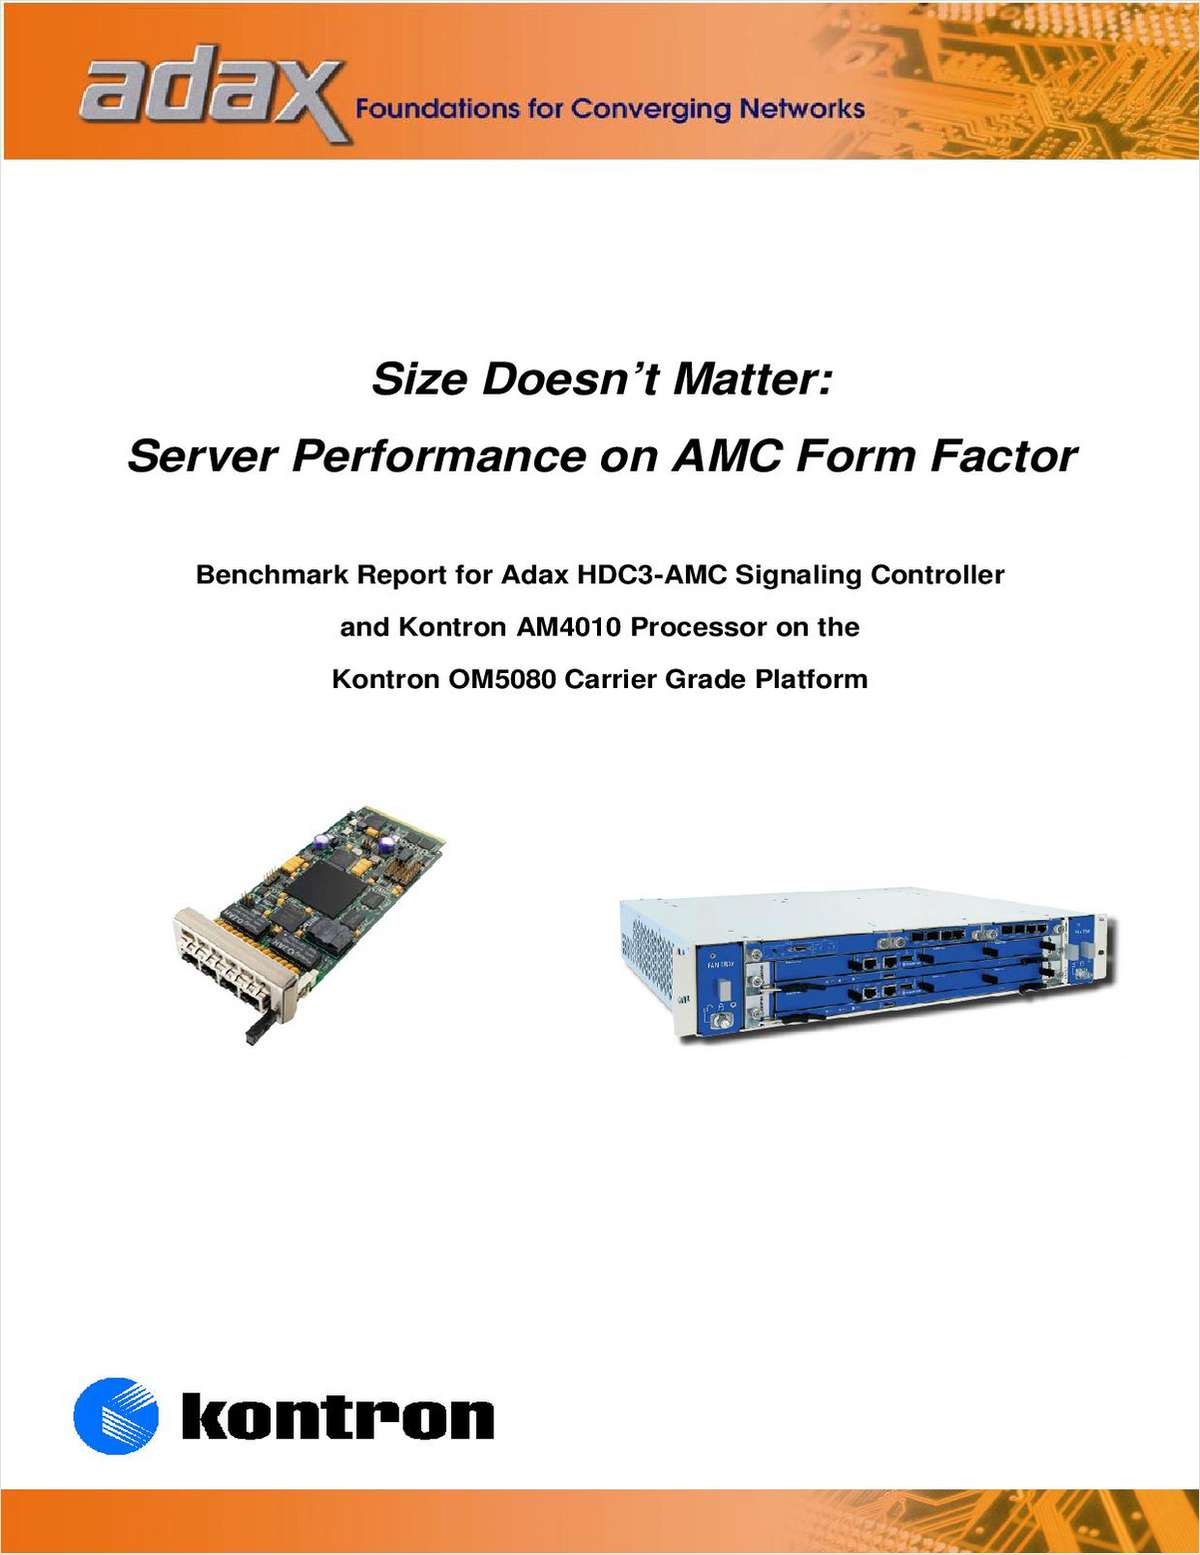 Size Doesn't Matter - Server Performance on AMC Form Factor